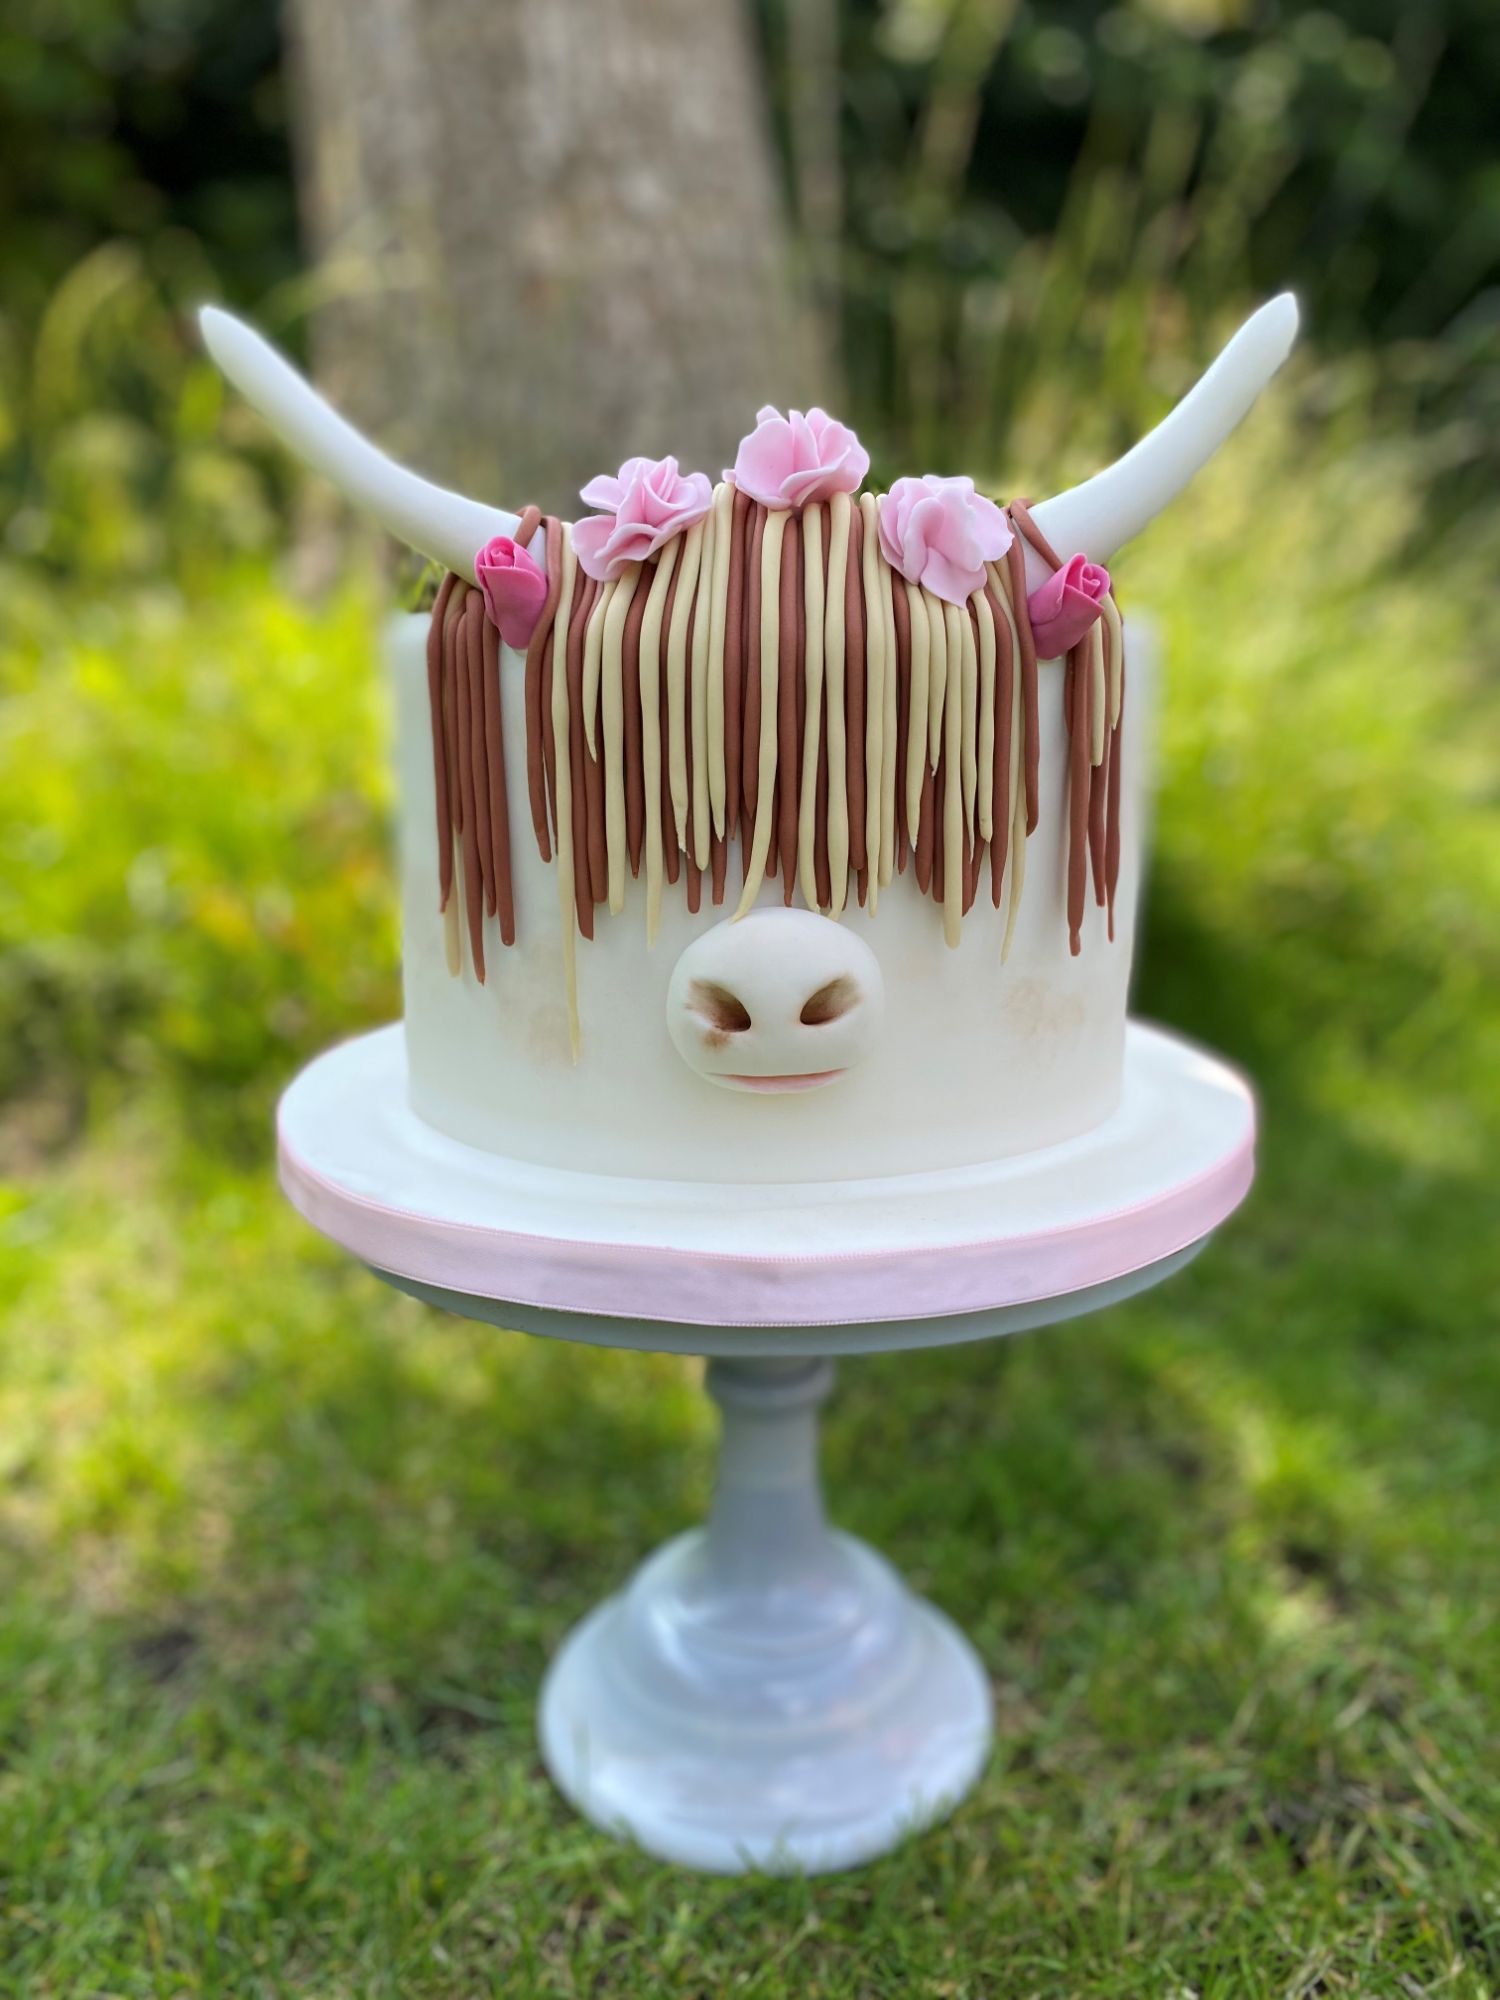 Helen Jane Cake Design, Christchurch, Dorset - celebration cakes (12)